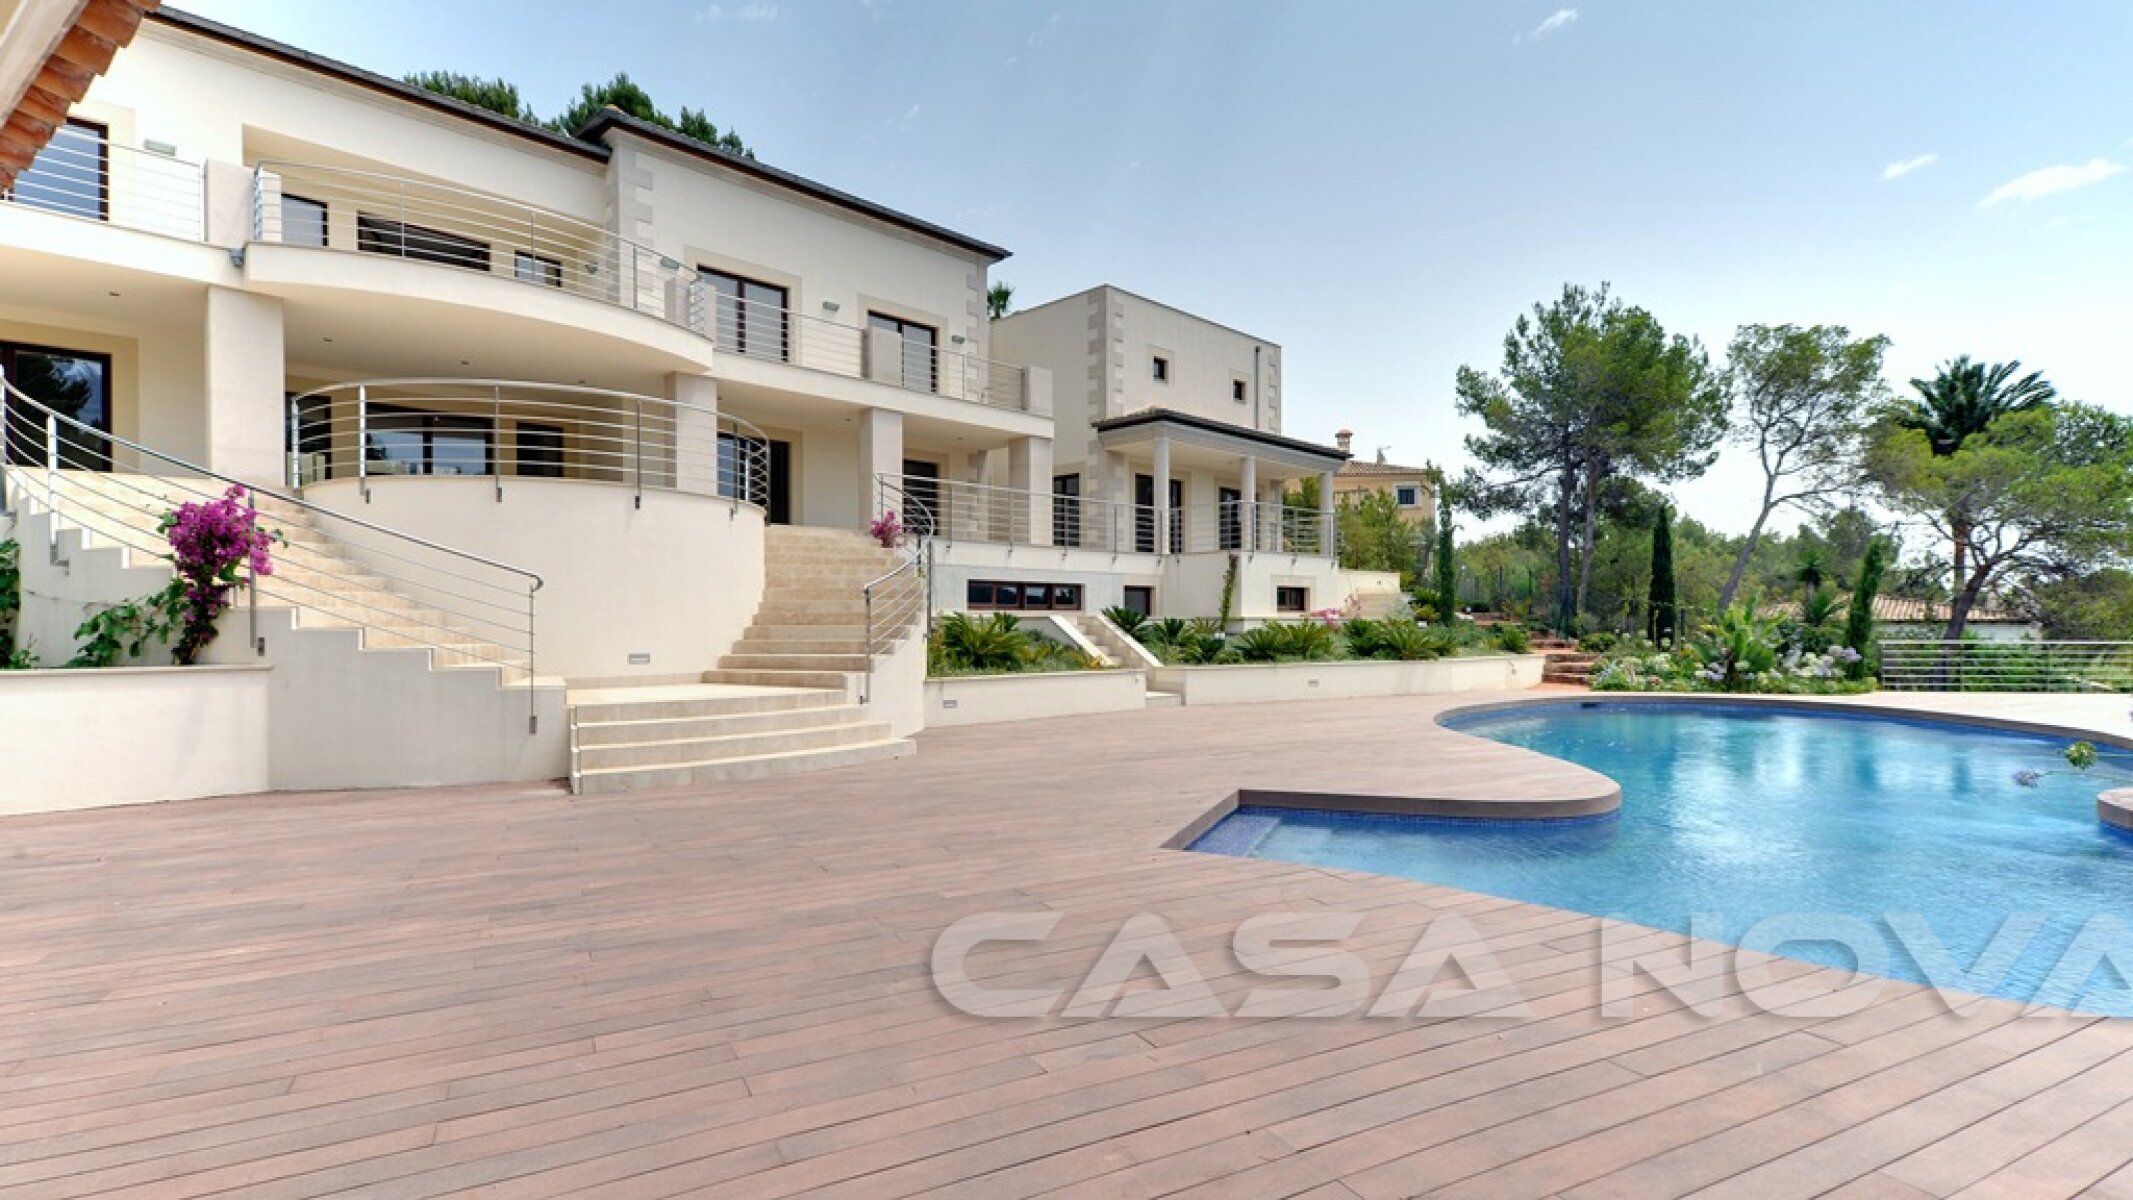 Exclusive real estate Mallorca in Son Vida on the golf course